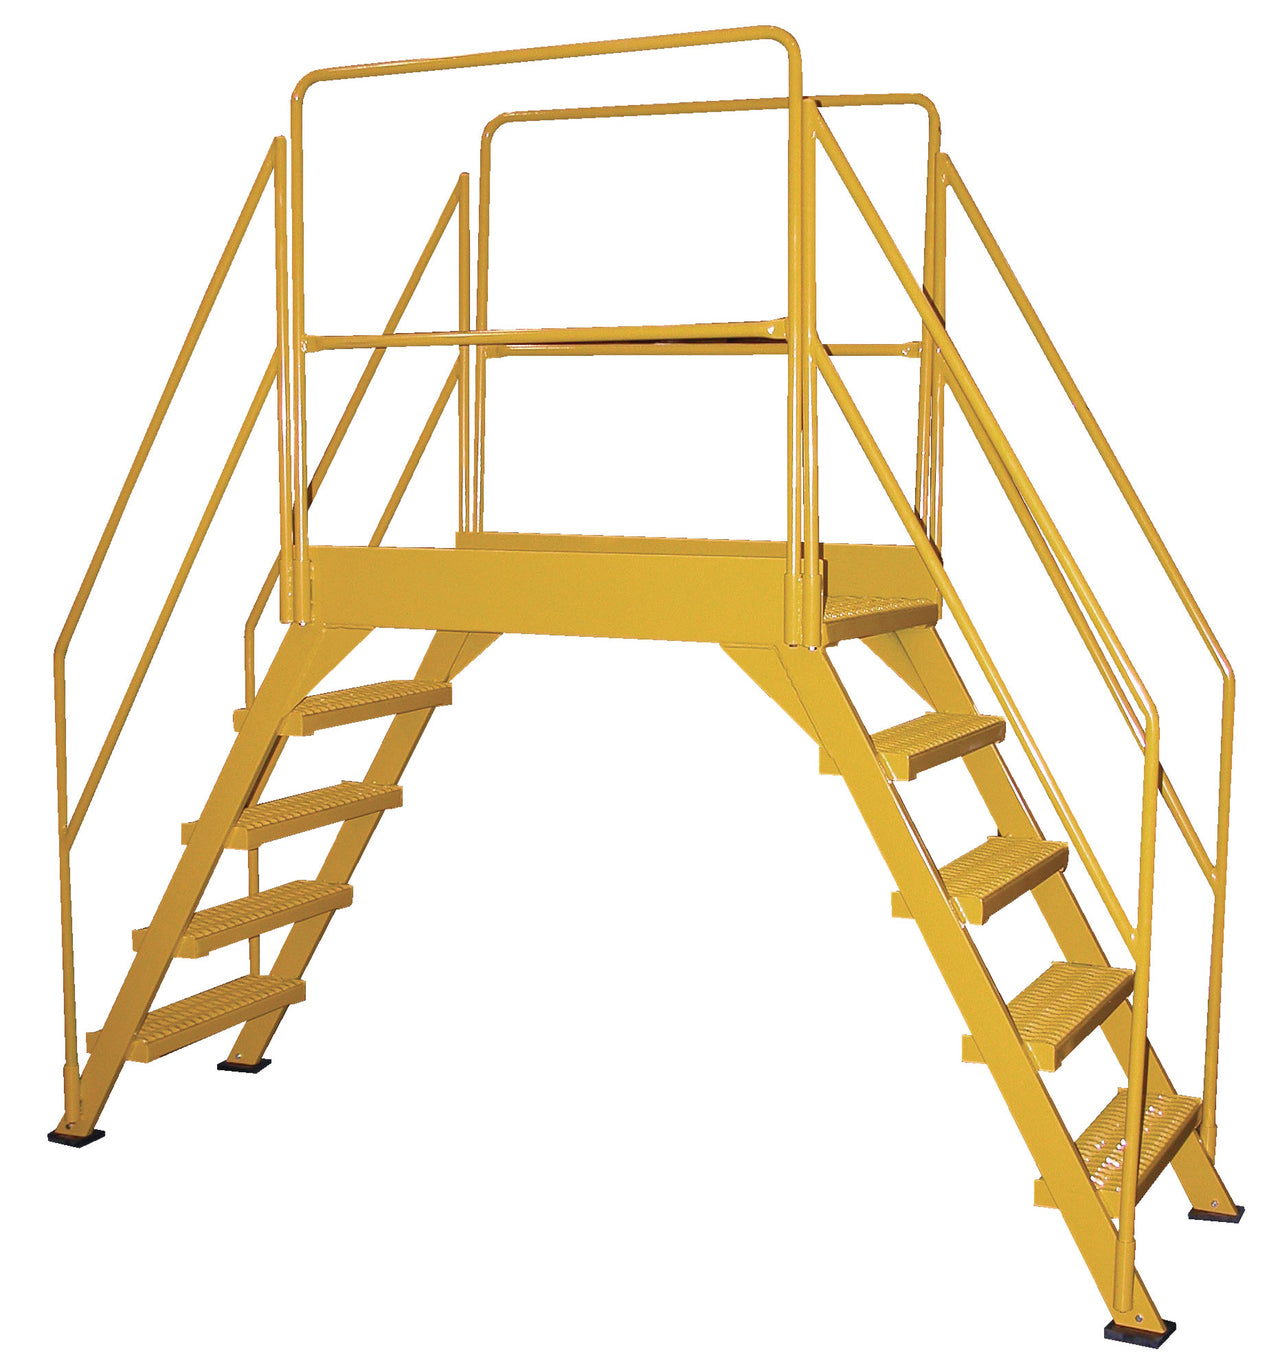 6 Step Cross-Over Ladder w/ 48" Deck